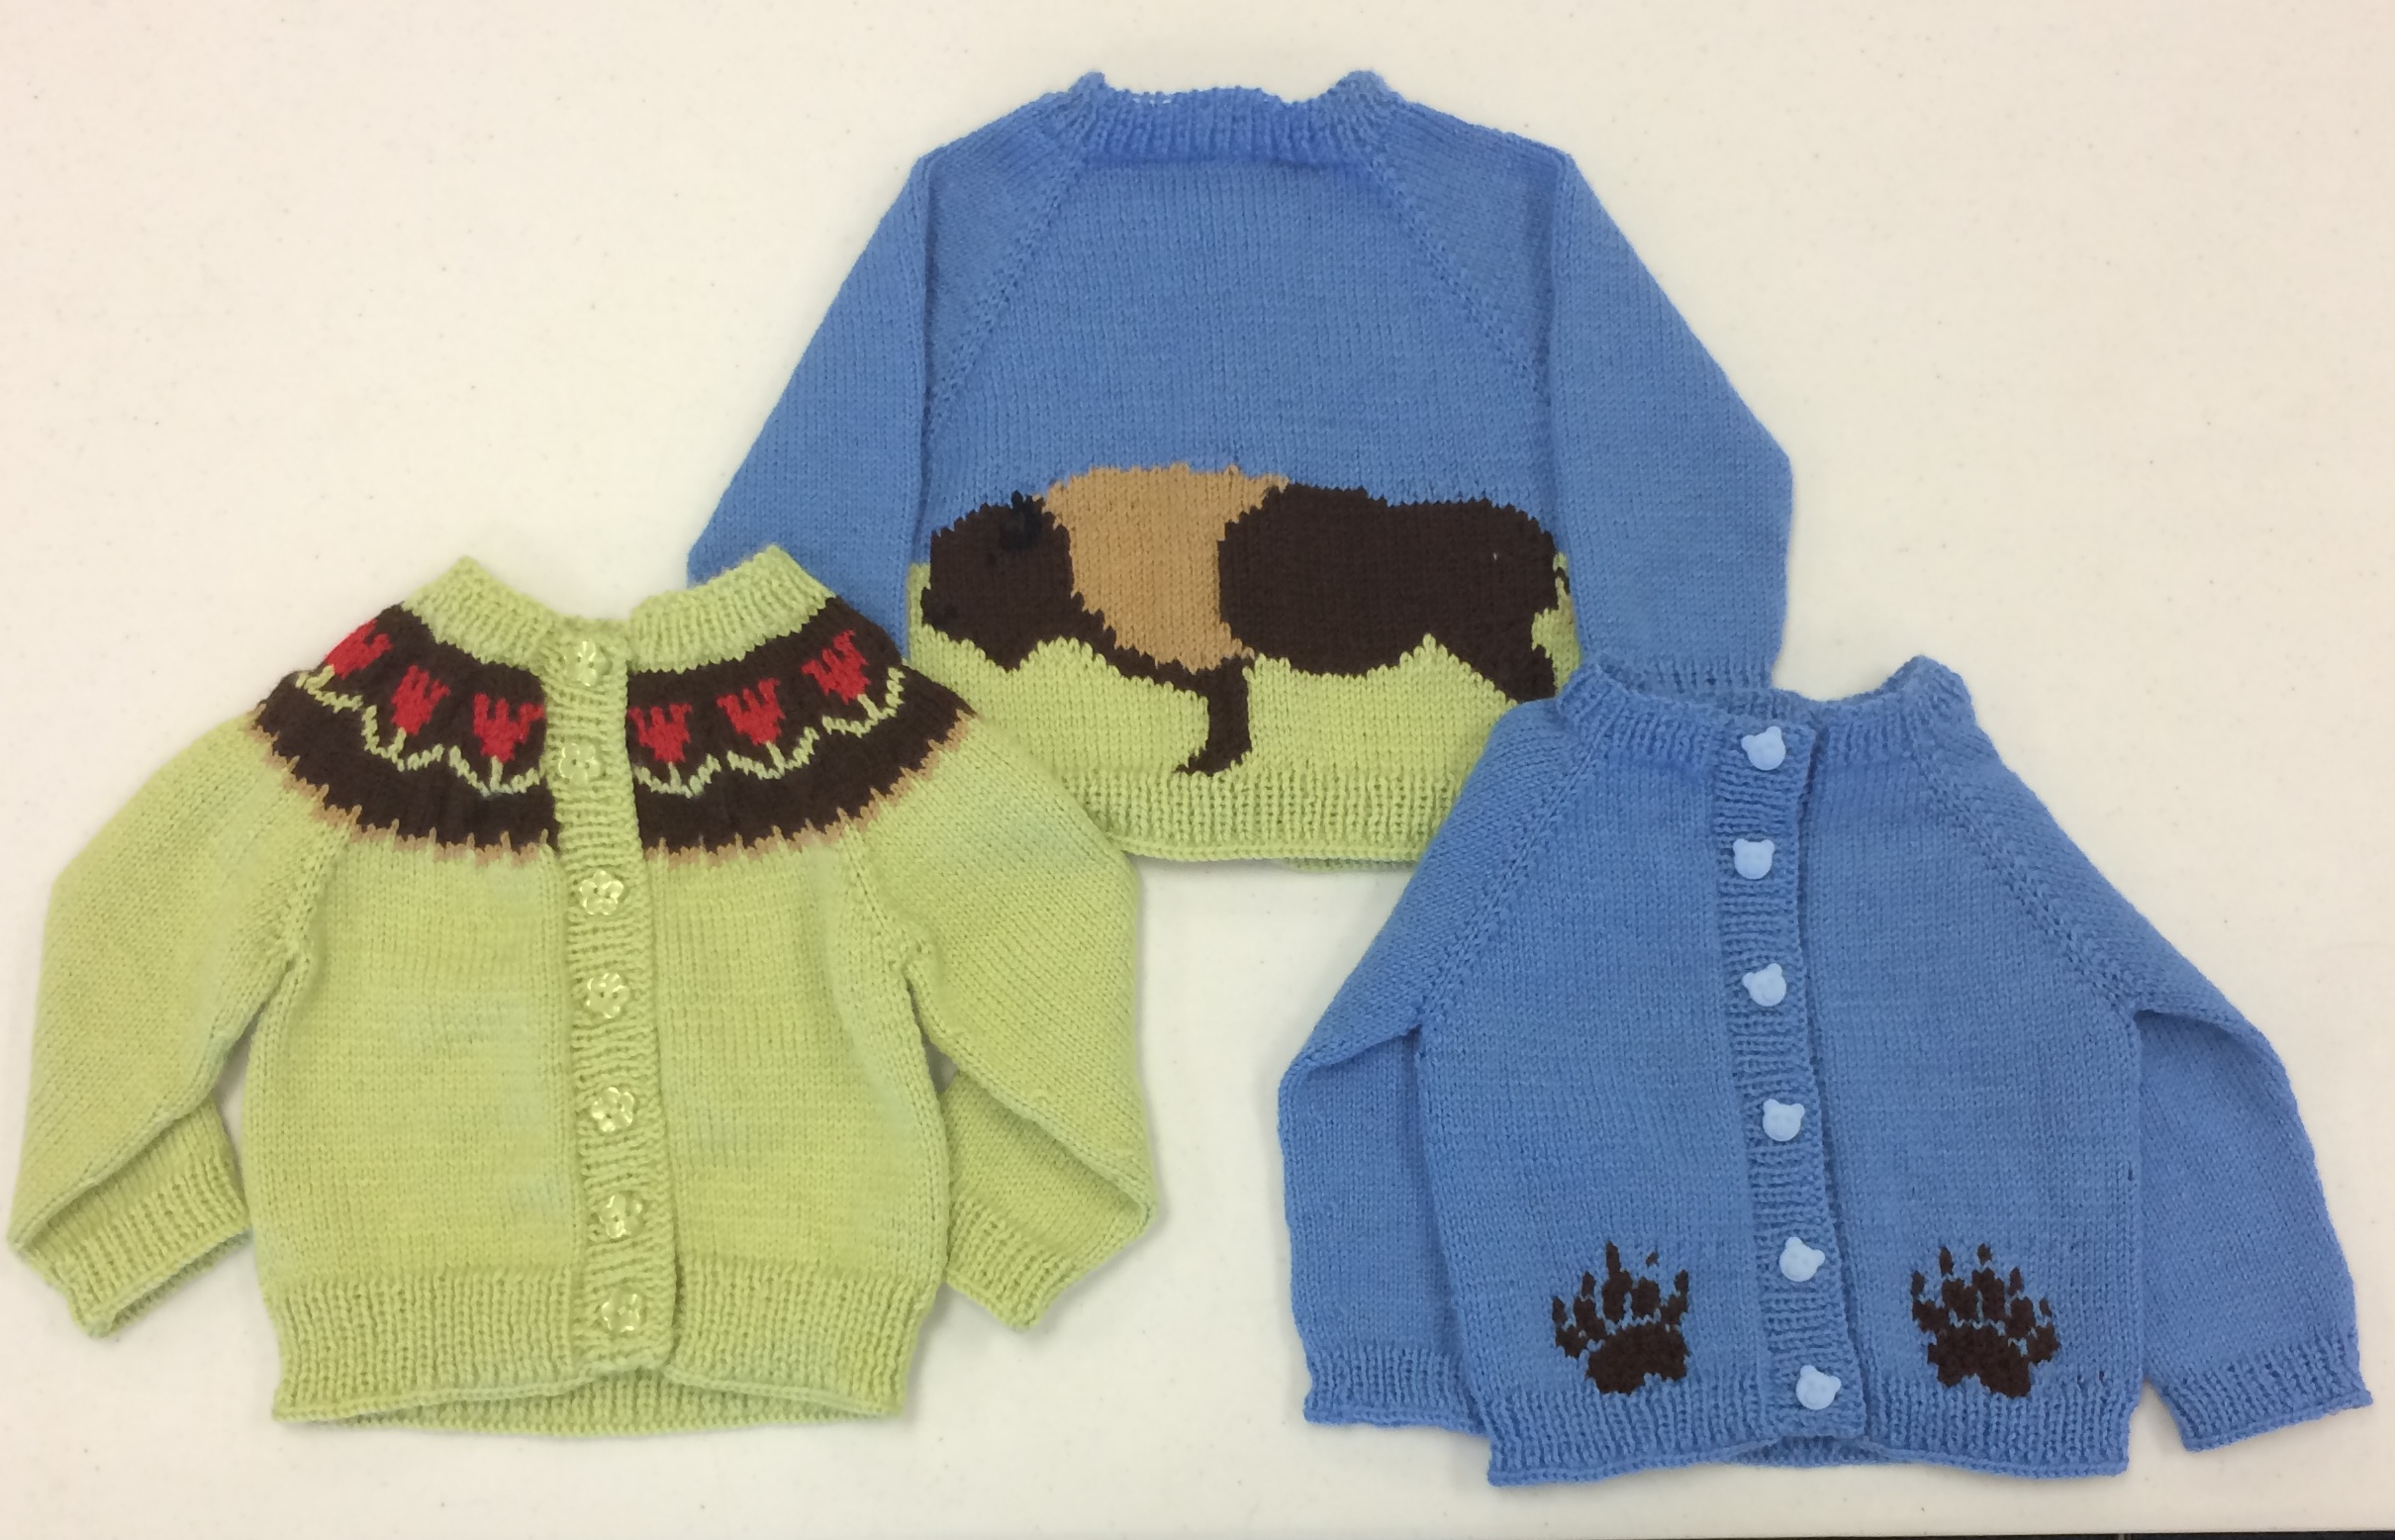 Three baby sweaters